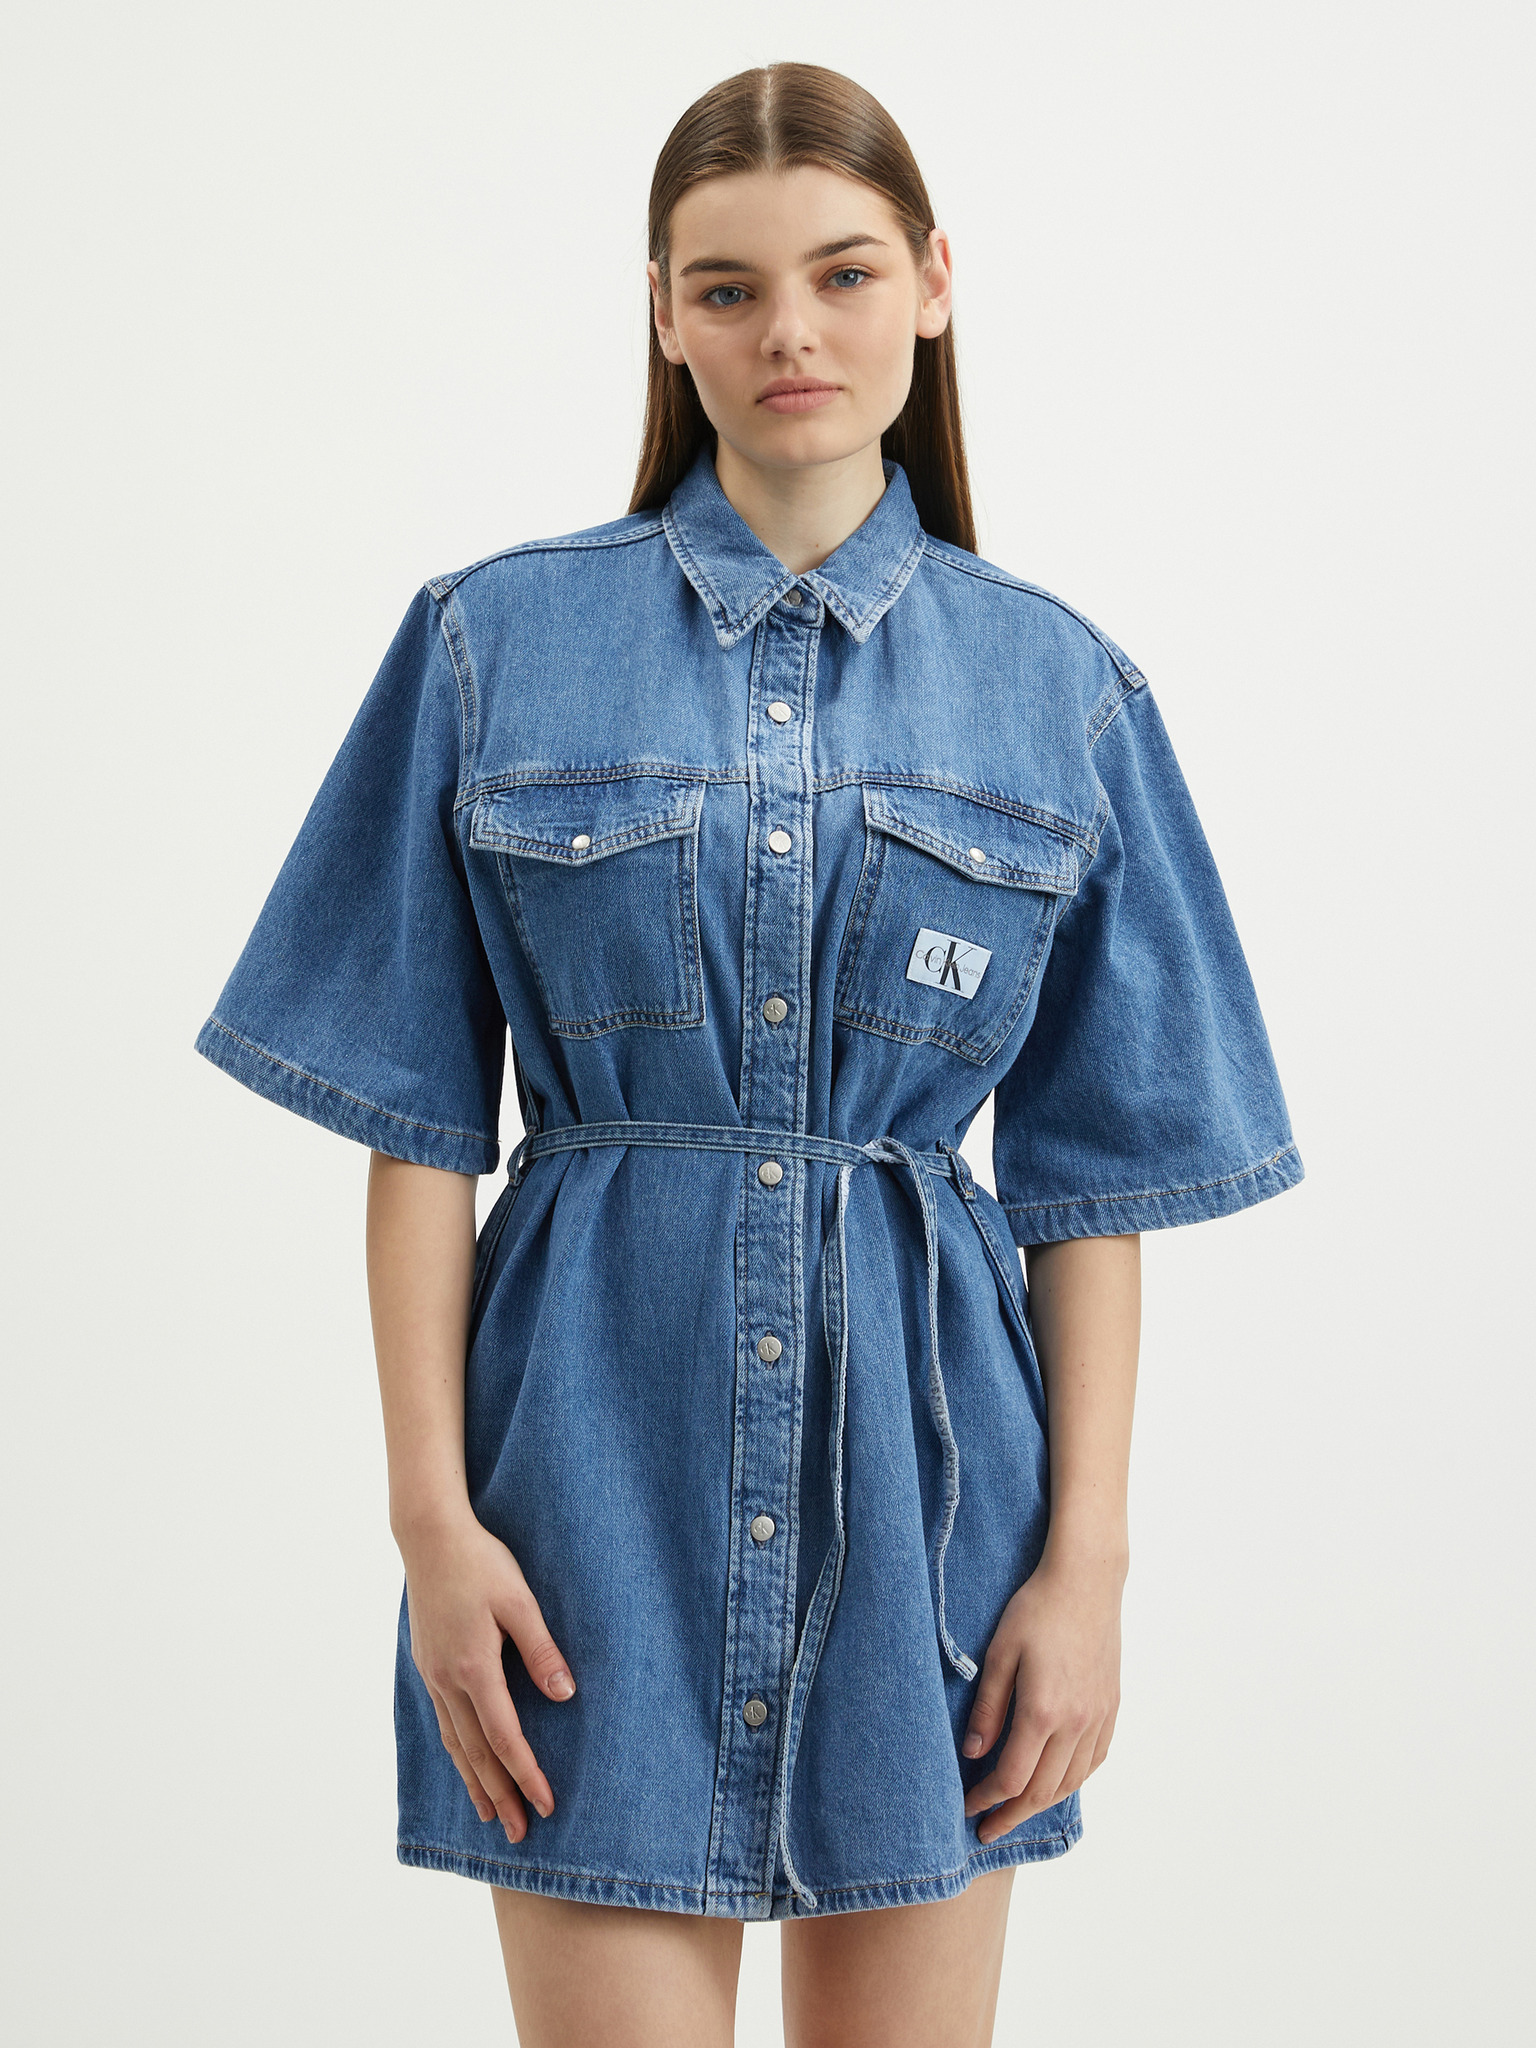 Calvin Klein Jeans Dresses for Women - Shop on FARFETCH